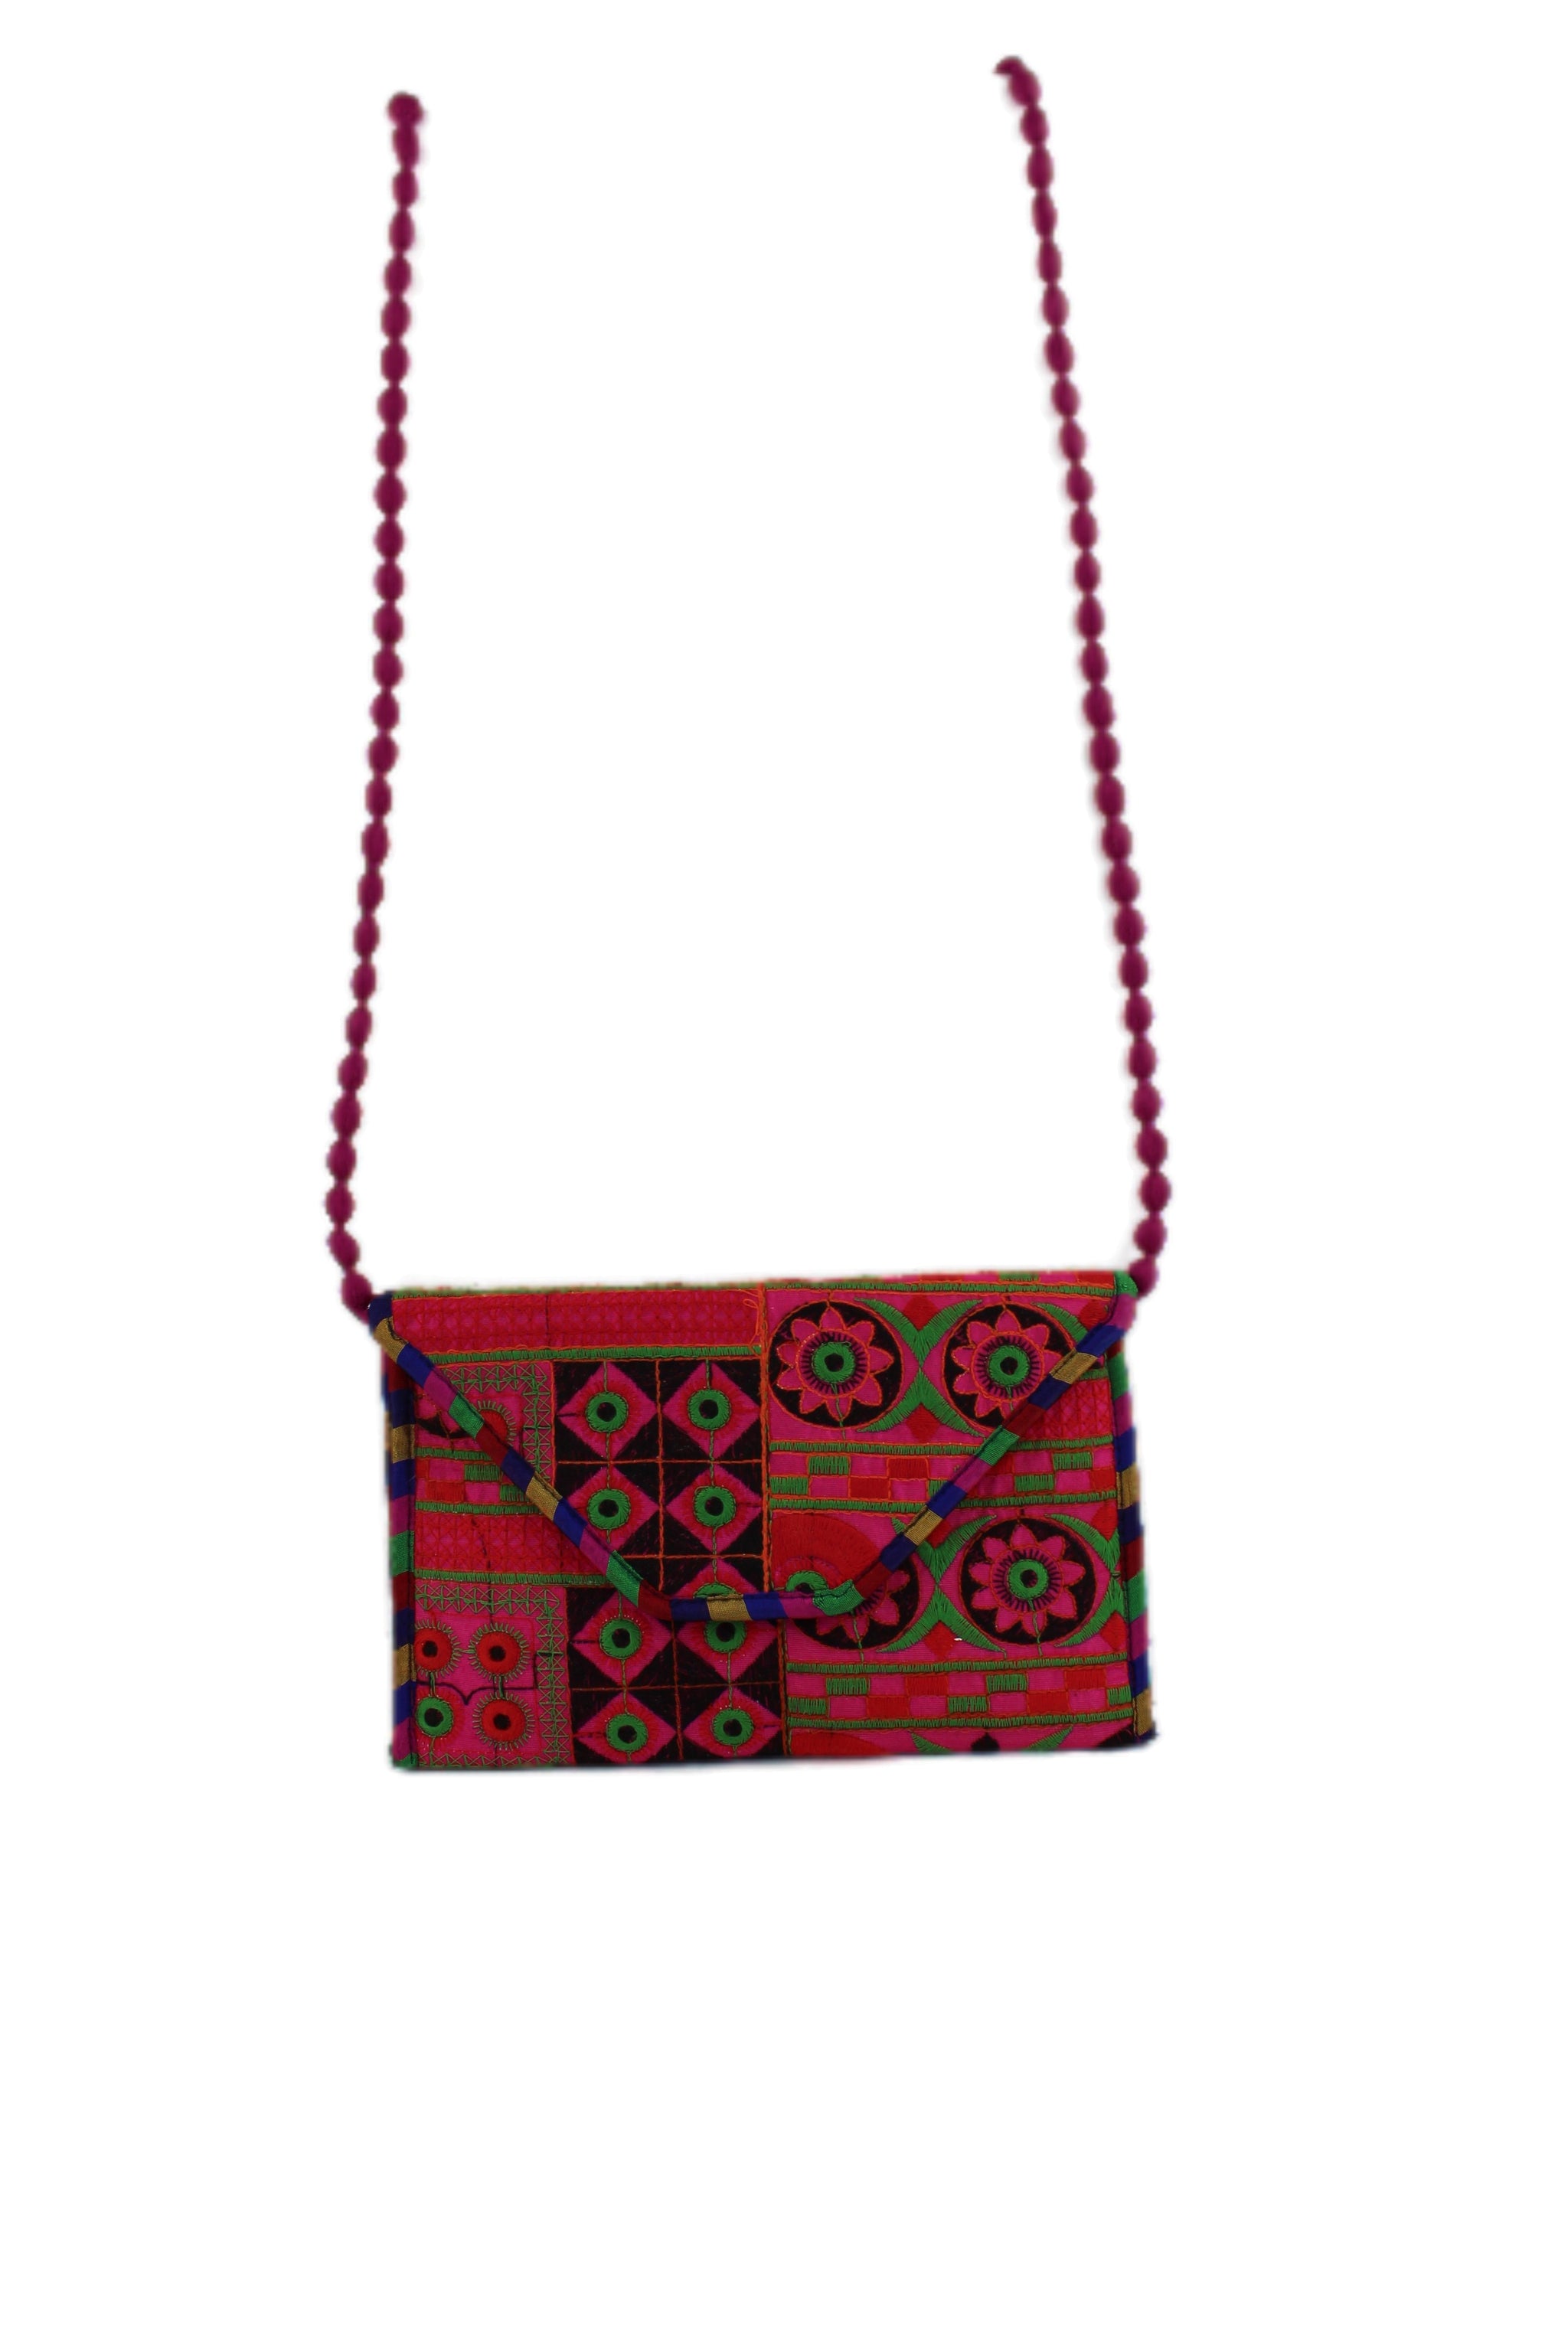 Grace Adele Faith-Stone Clutch Metallic Envelope Style Handbag /Purse -  Retired | eBay